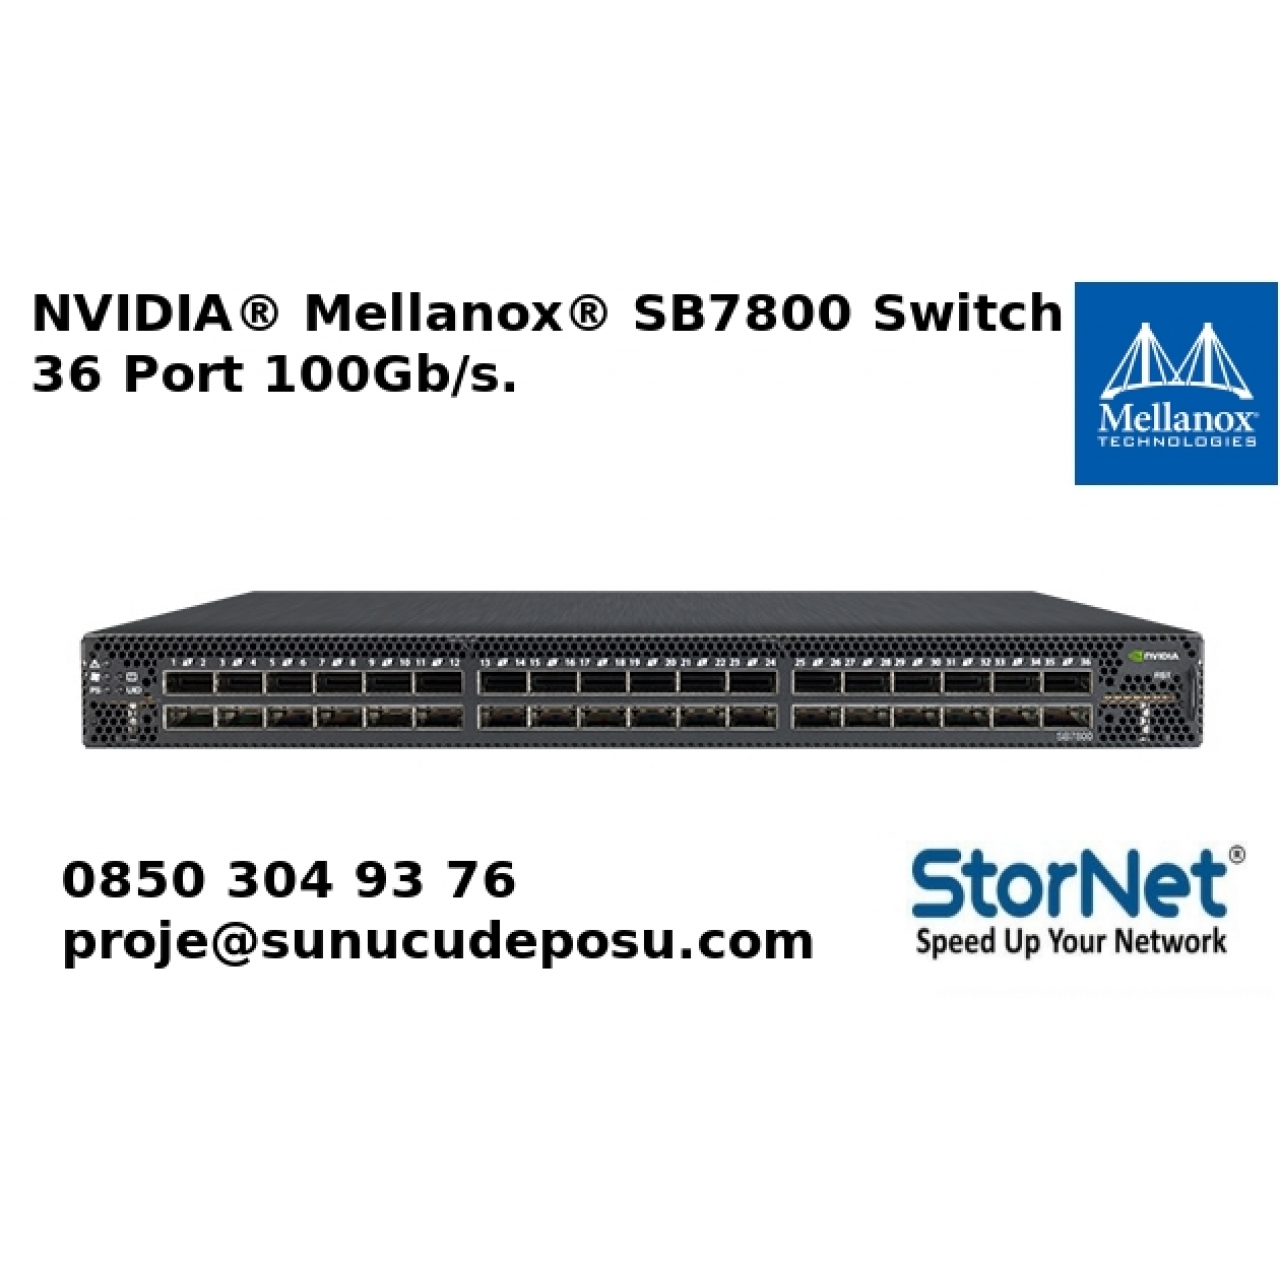 NVIDIA Mellanox SB7800 Switch 36 Port 100Gb/s